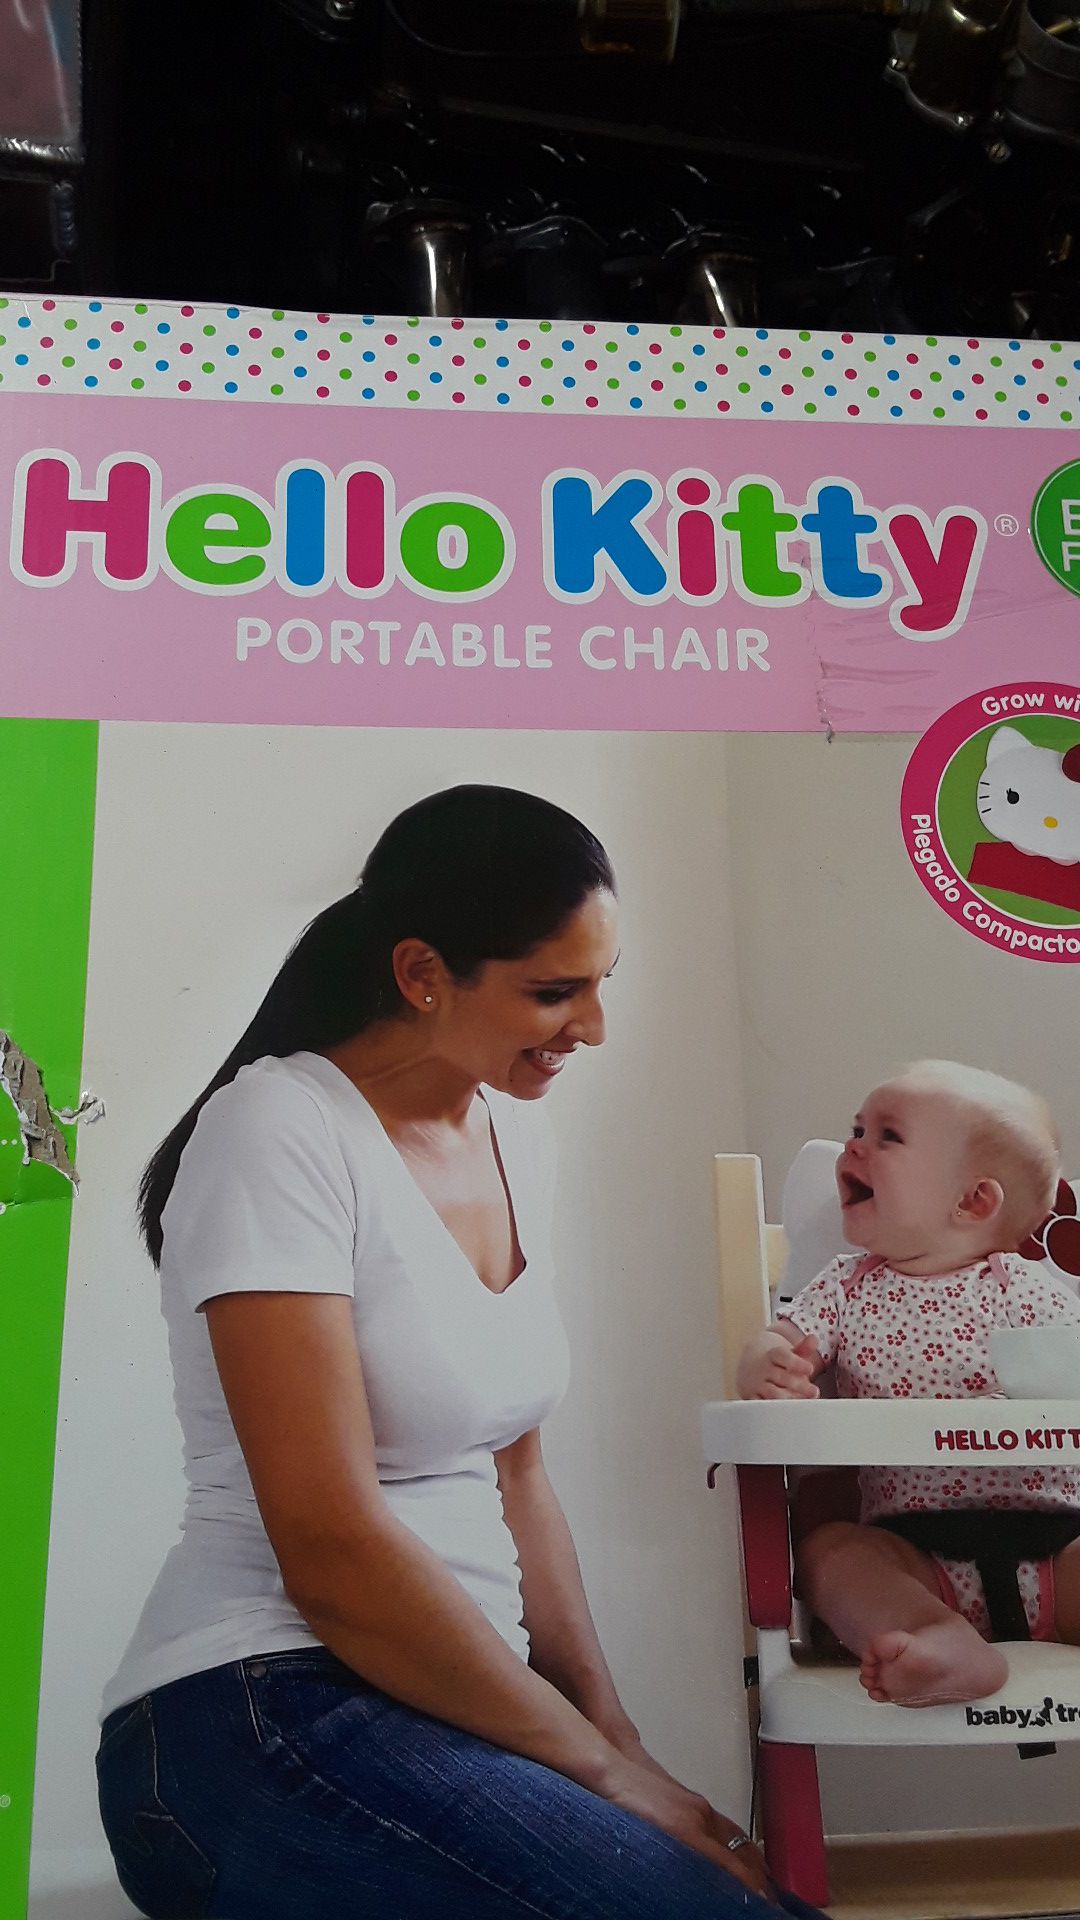 Hello Kitty (Portable Chair)